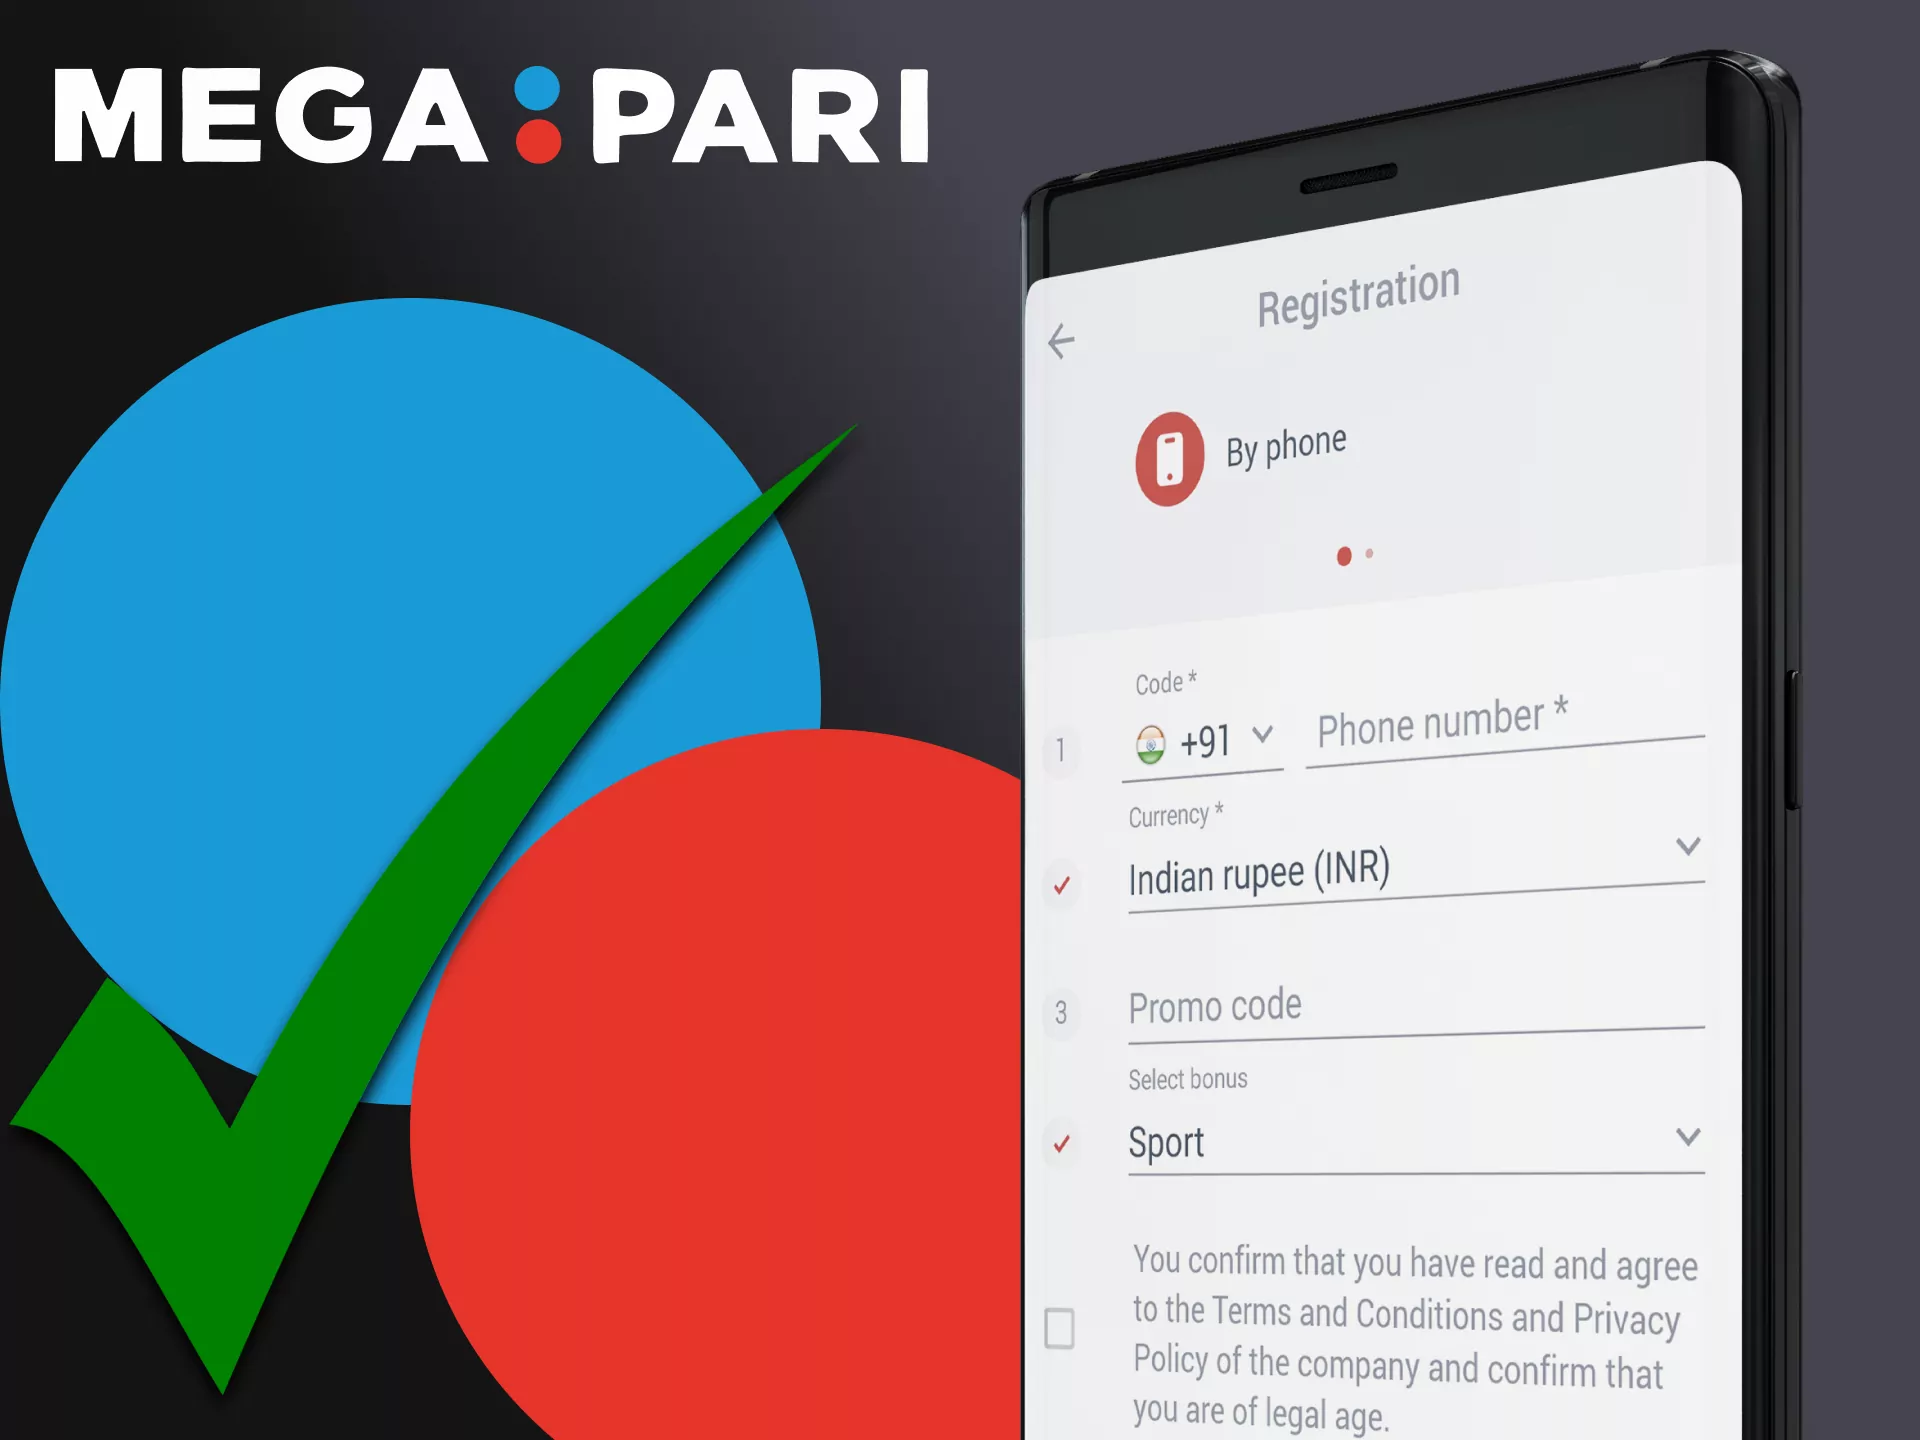 You can register an account through the Megapari application.